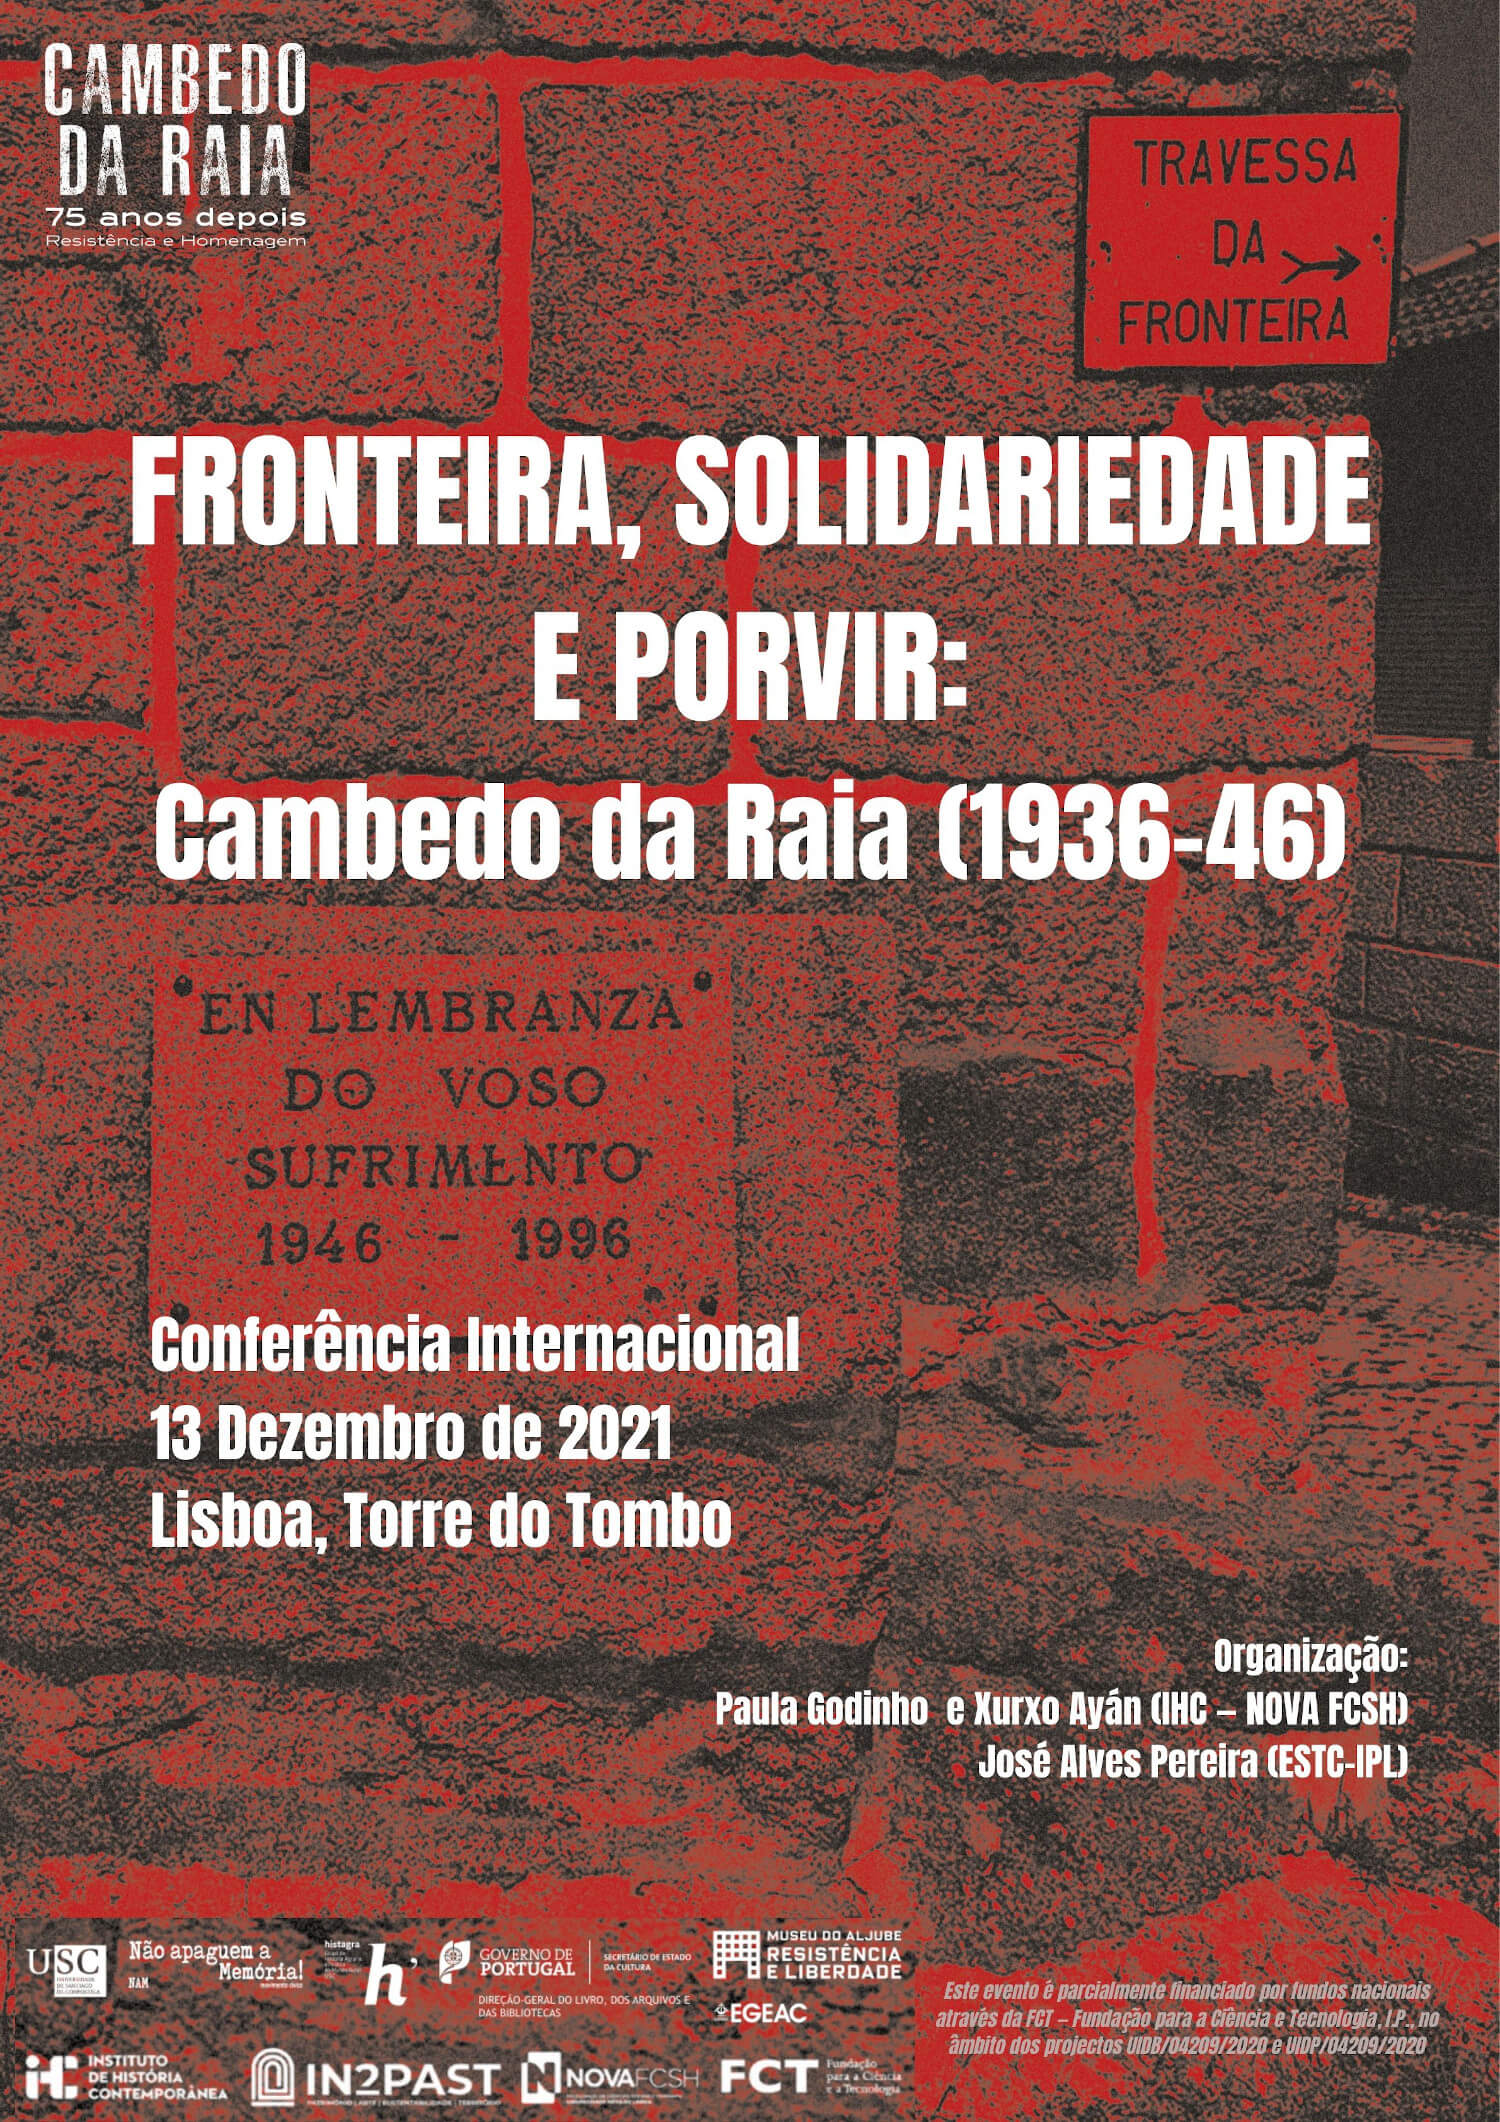 Cartaz da conferência "Fronteira, Solidariedade e Porvir: Cambedo da Raia (1936-46)". 13 de Dezembro de 2021, Lisboa, Torre do Tombo